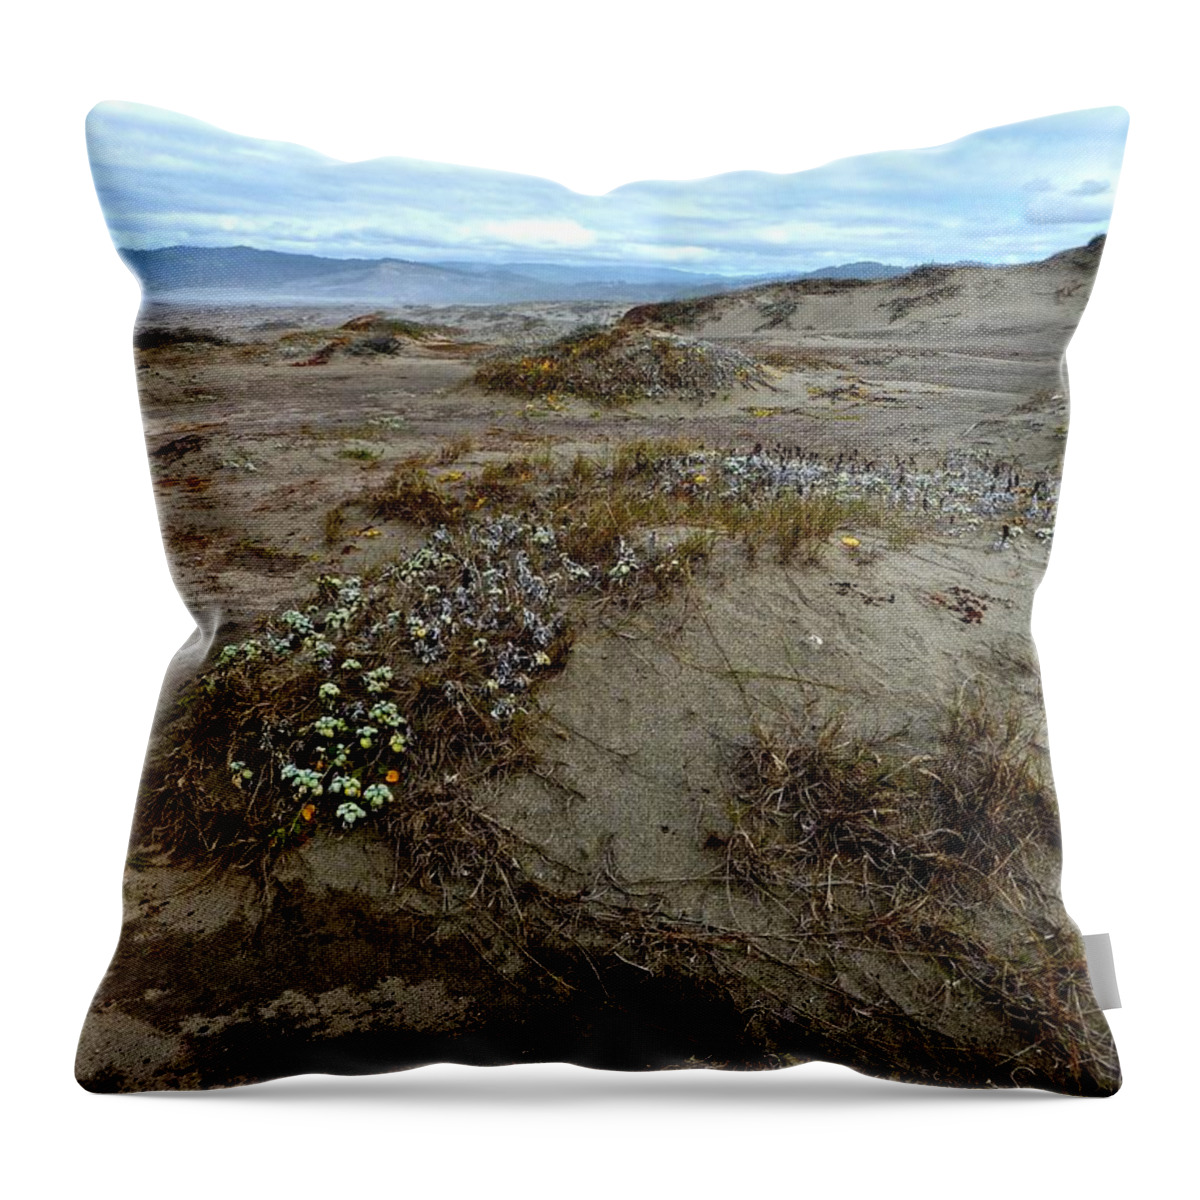 Mackerricher State Beach Throw Pillow featuring the photograph Headlands MacKerricher State Beach by Amelia Racca